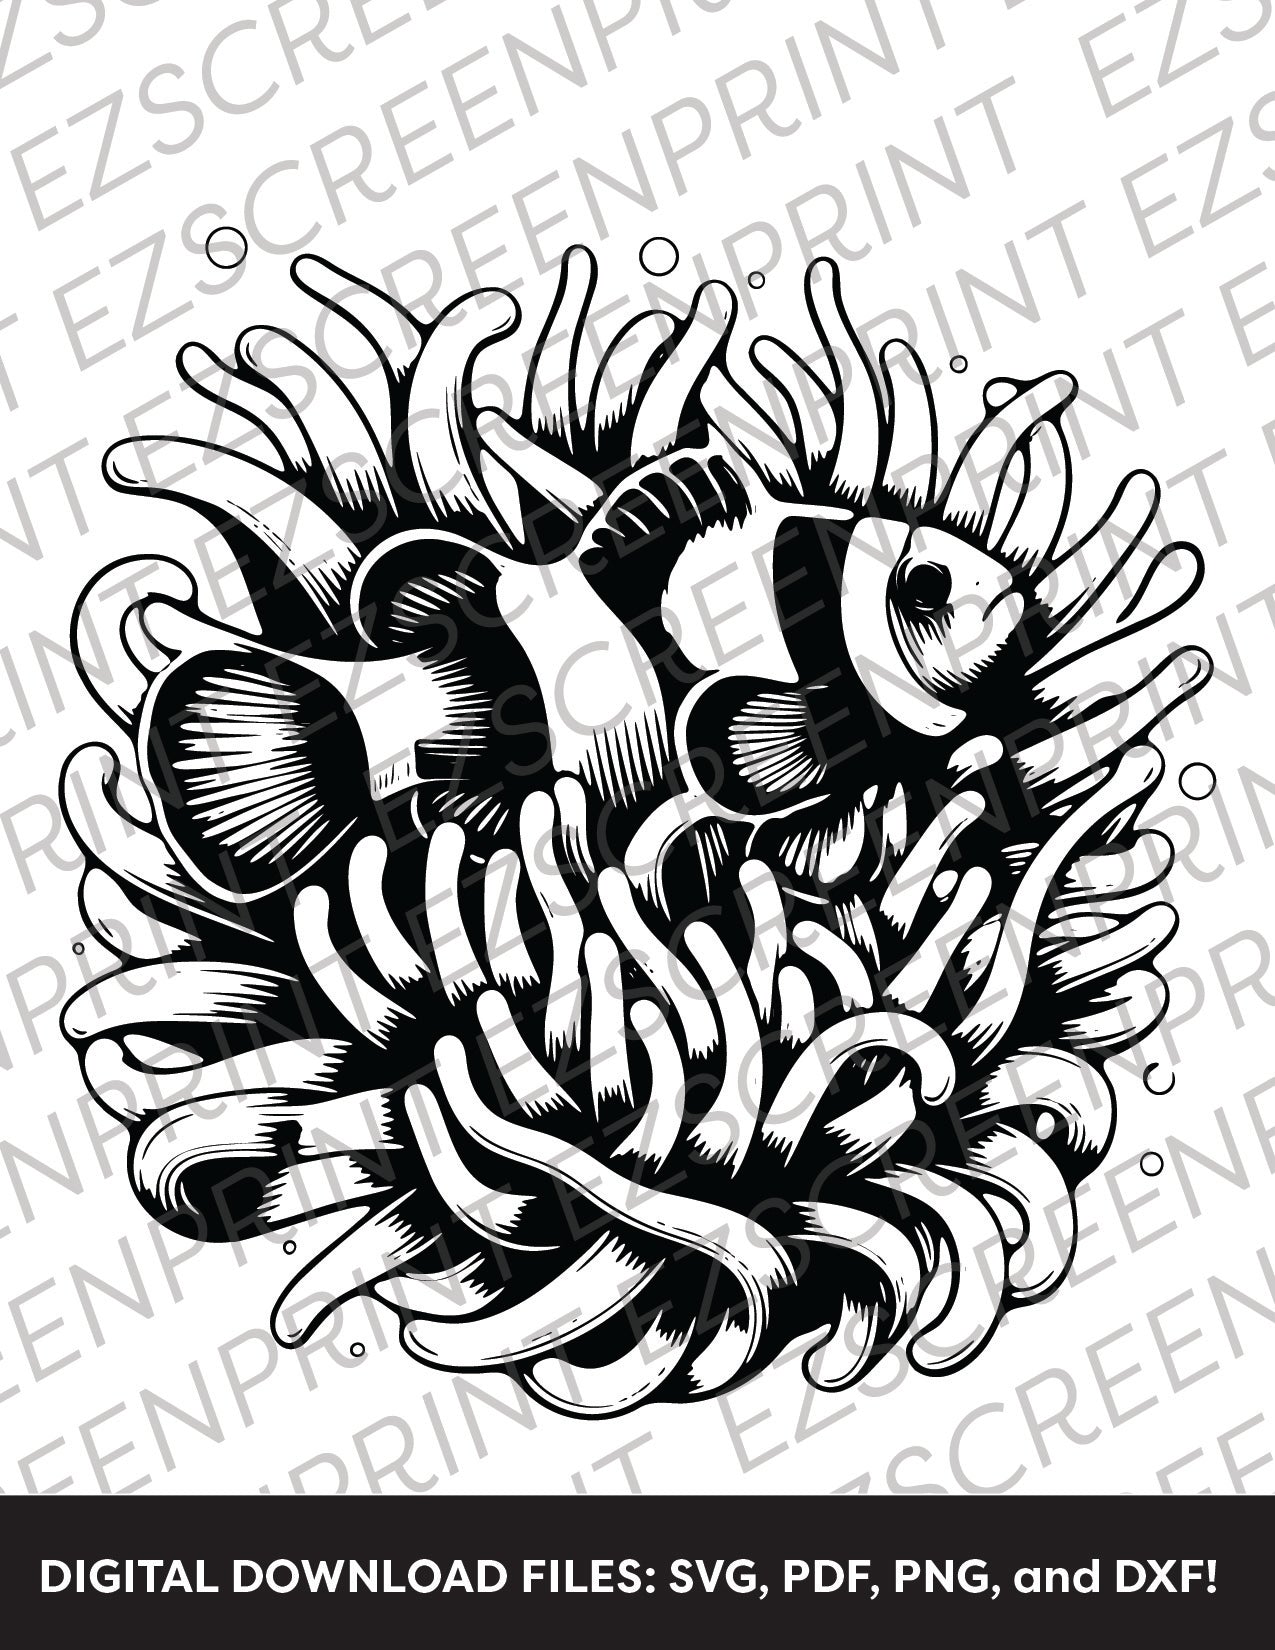 Clownfish & Anemone, 8.5"x11" + Digital Download